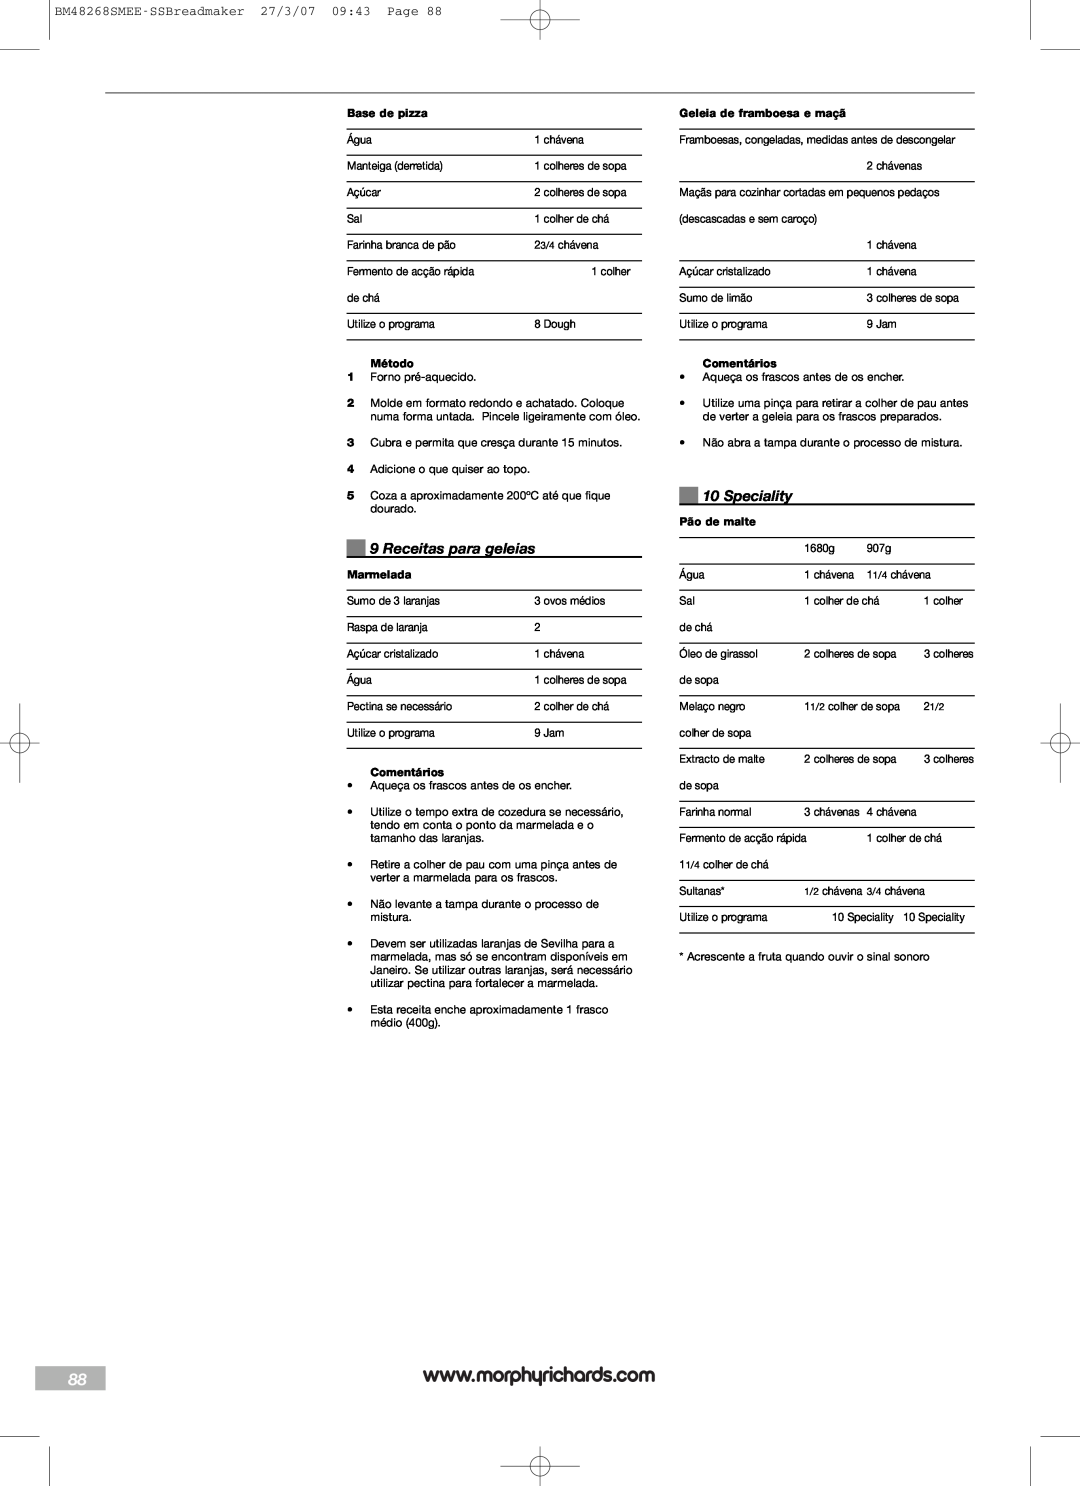 Morphy Richards Receitas para geleias, Speciality, BM48268SMEE-SSBreadmaker27/3/07 09:43 Page, Base de pizza, Método 